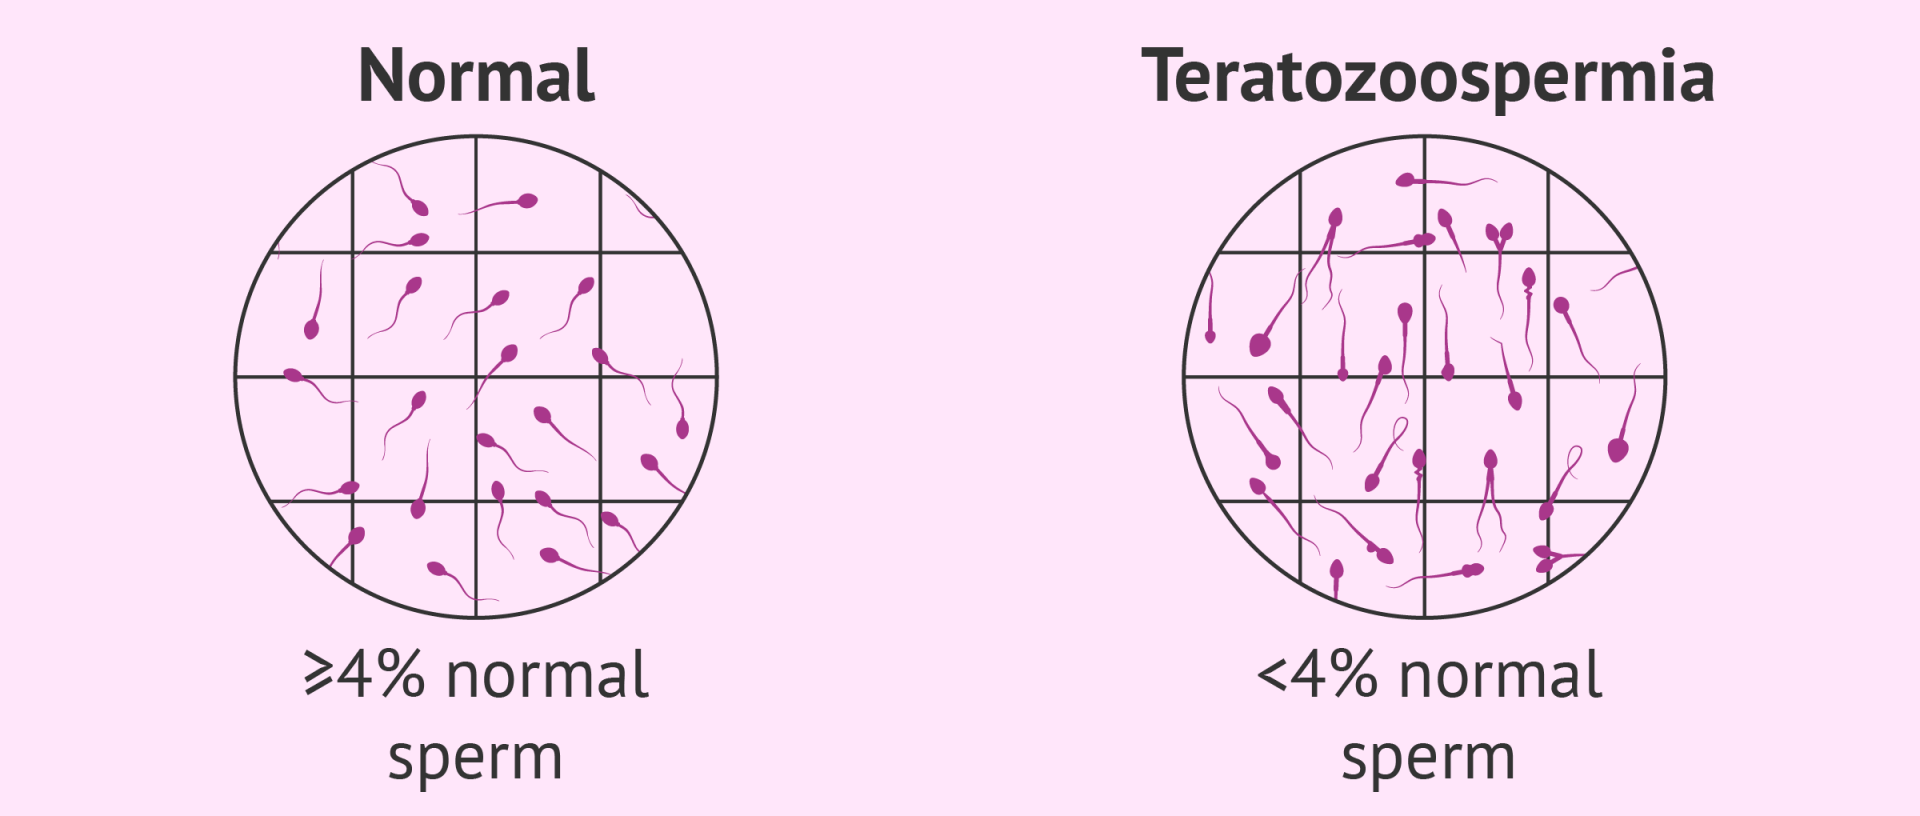 Male sterility due to teratozoospermia